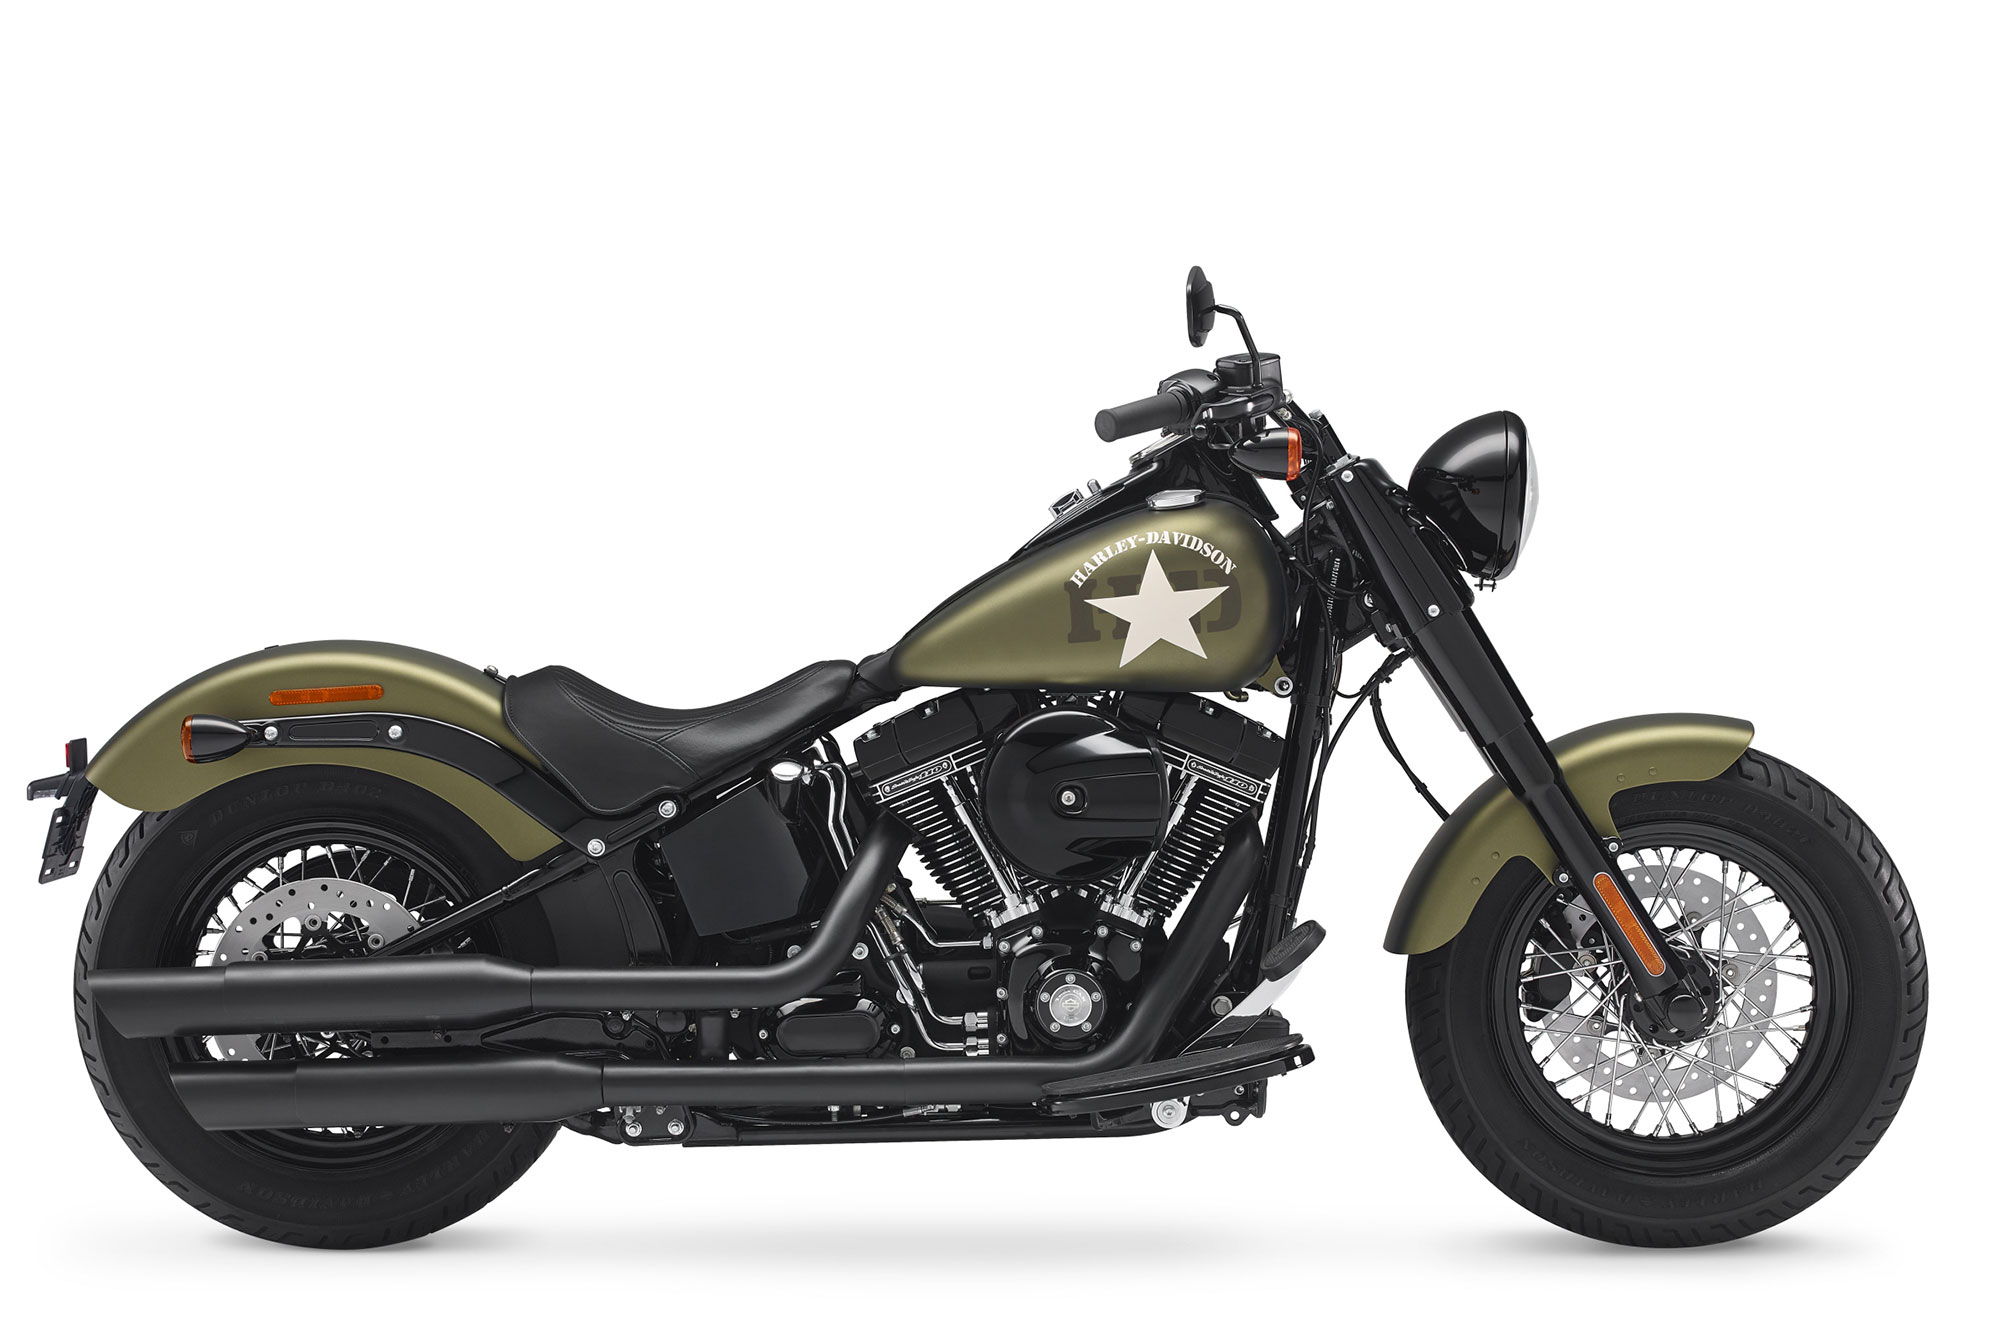 2016 Harley-Davidson Softail Slim S Fat Custom Review